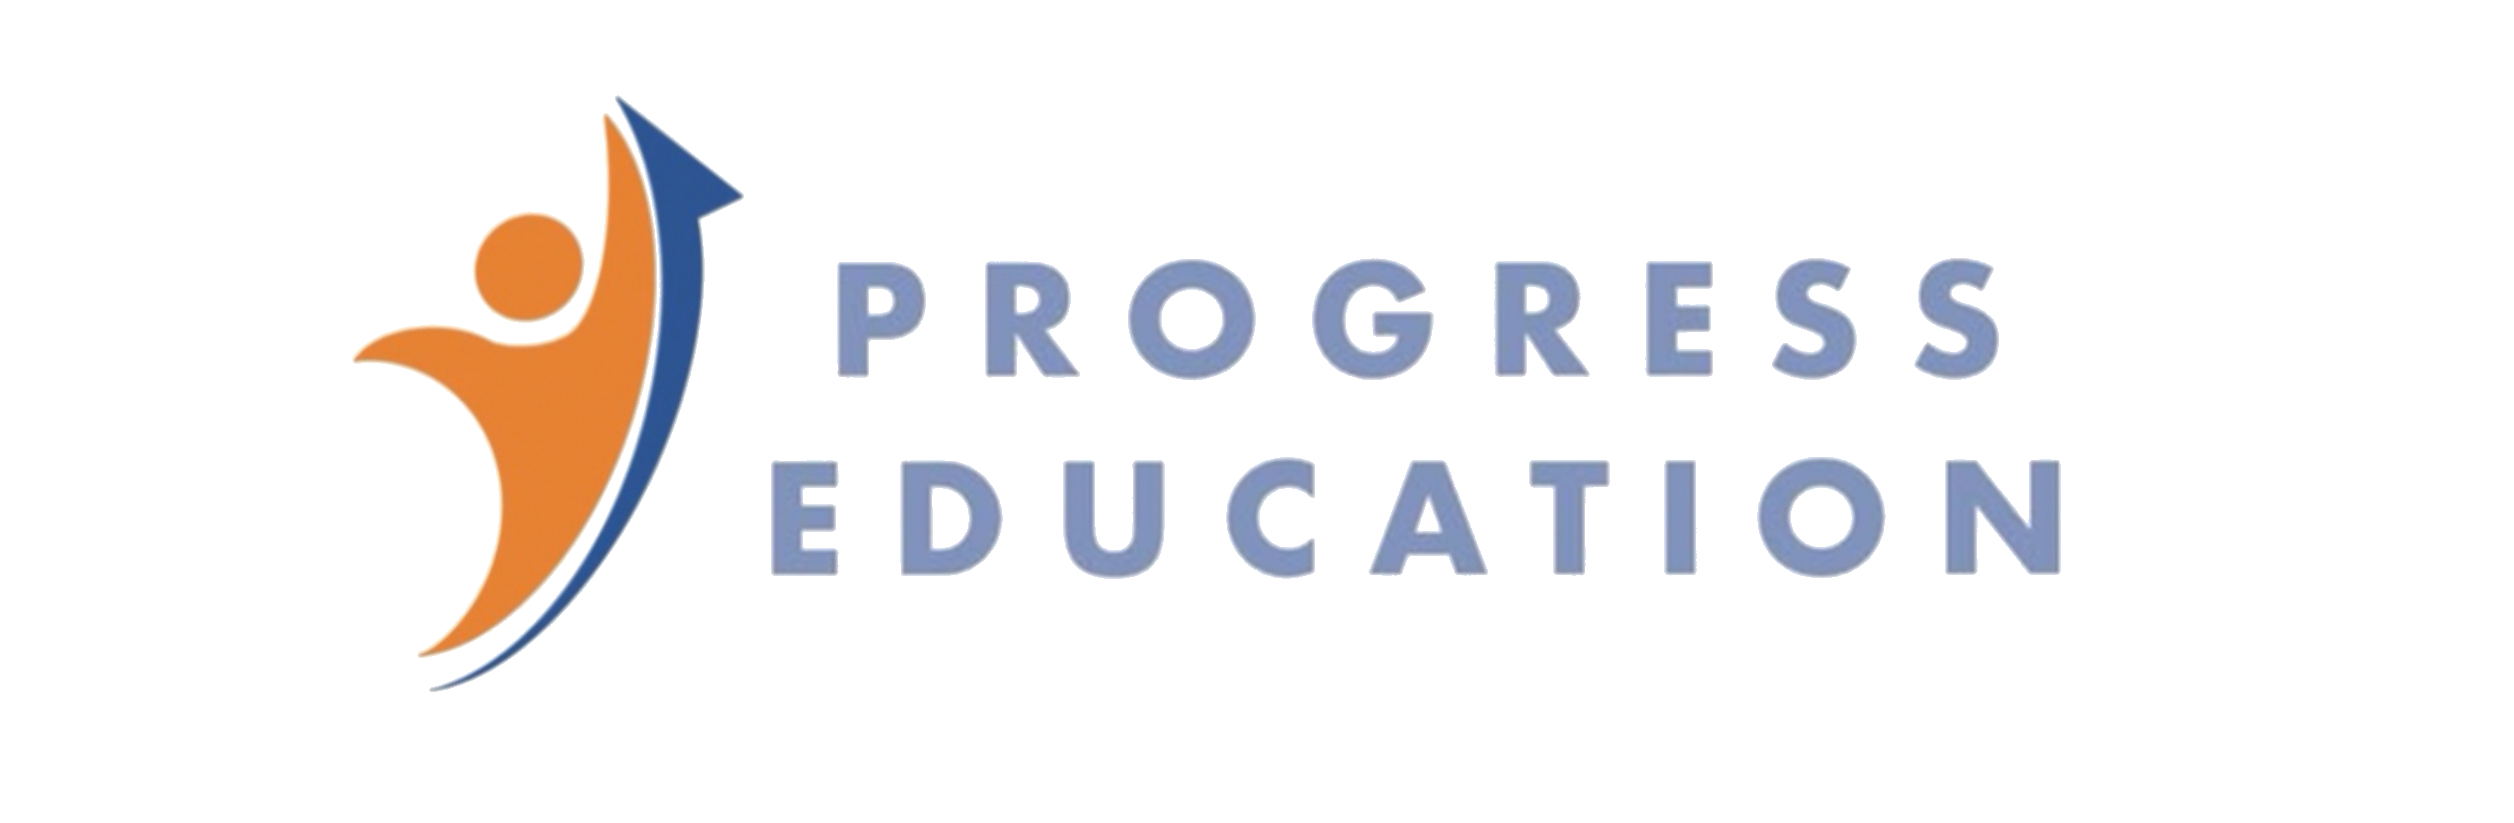 Progress Education